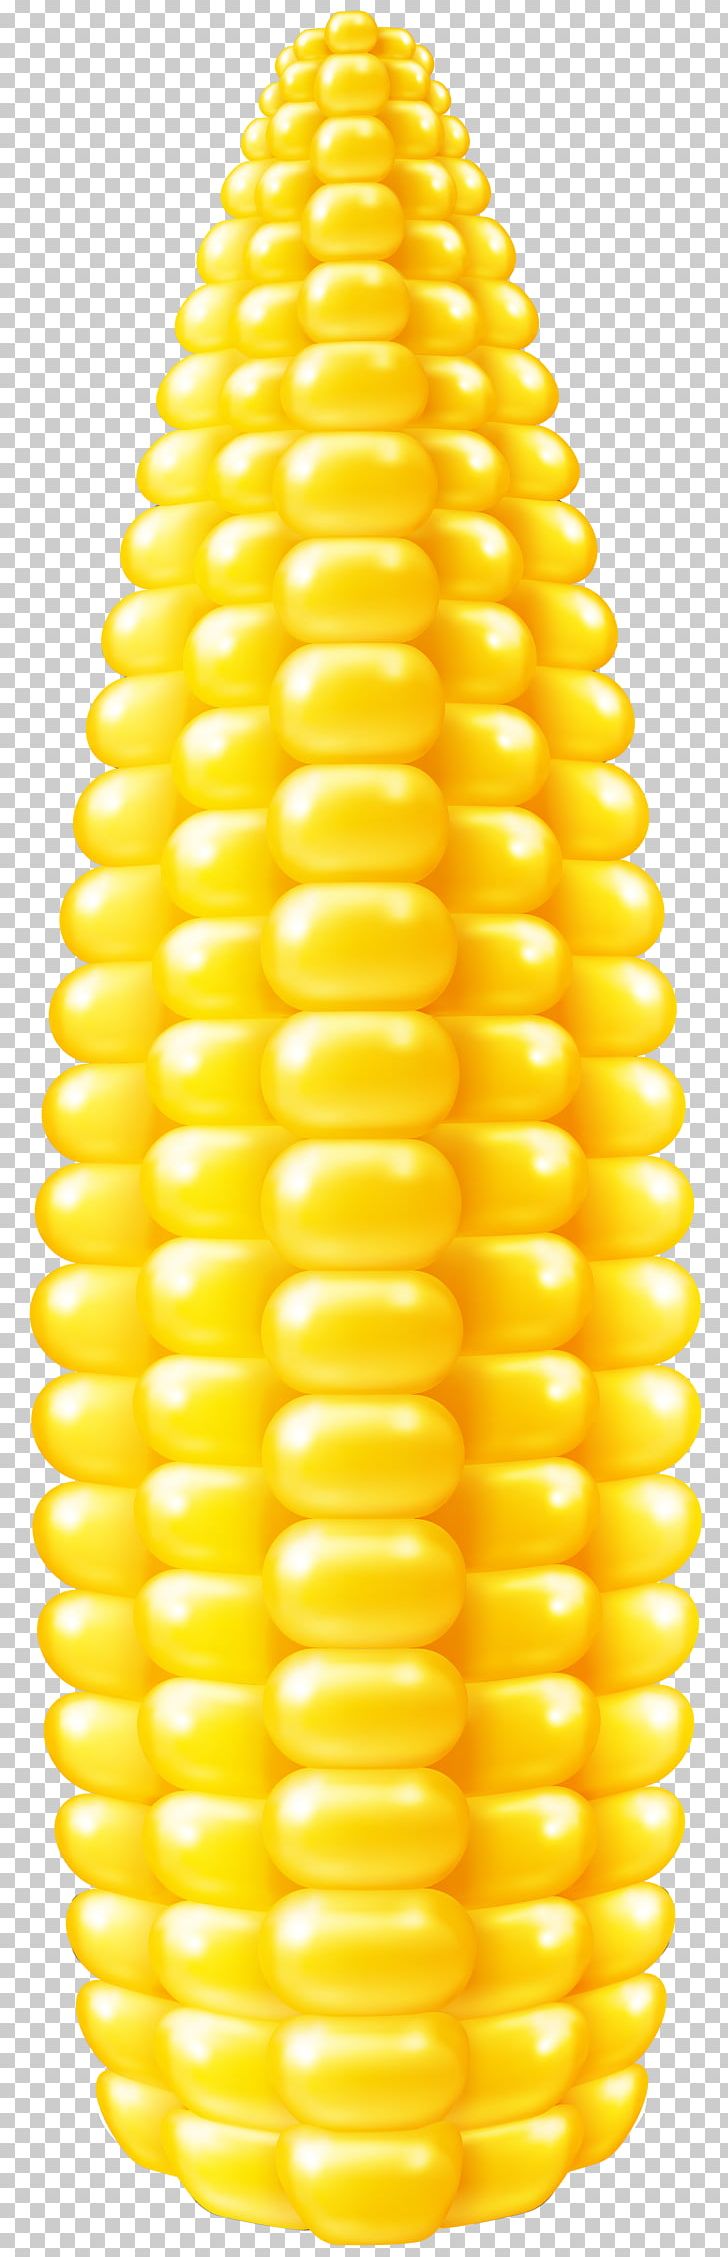 Corn On The Cob Maize Stock Illustration Corncob PNG, Clipart, Baby Corn, Clipart, Clip Art, Commodity, Corncob Free PNG Download